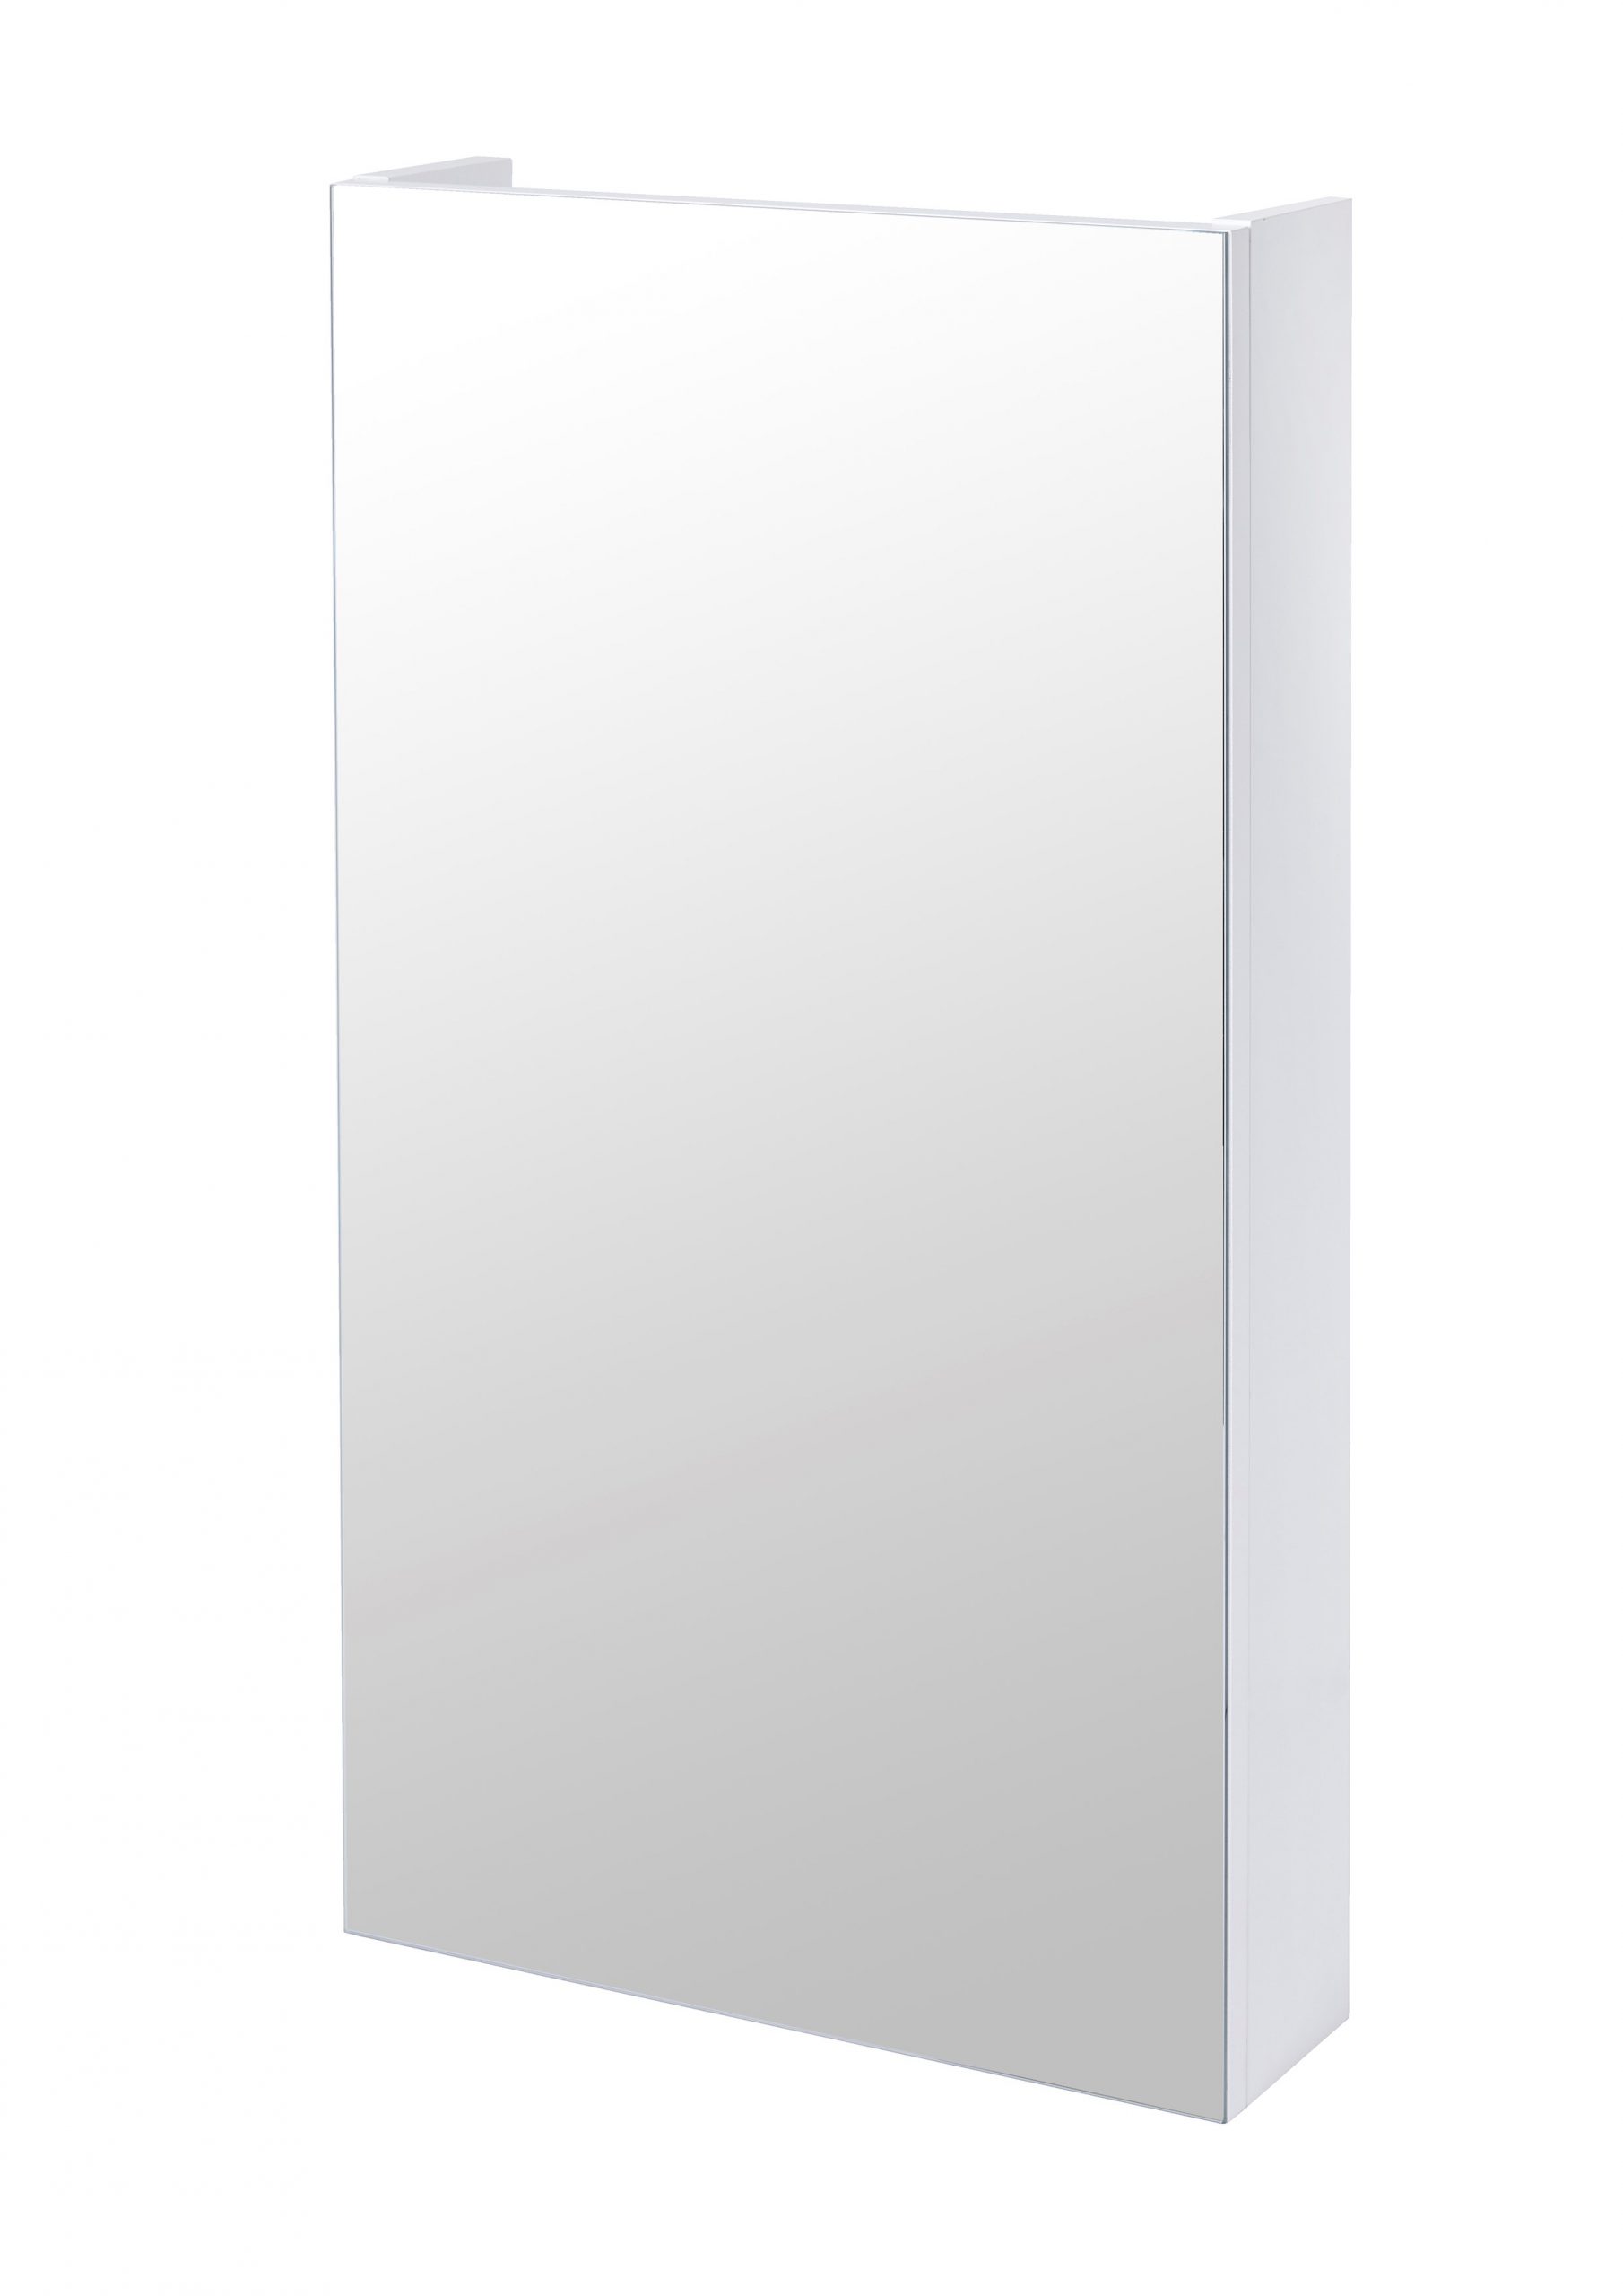 The M-255 approved Kāinga Ora bathroom mirror cabinet